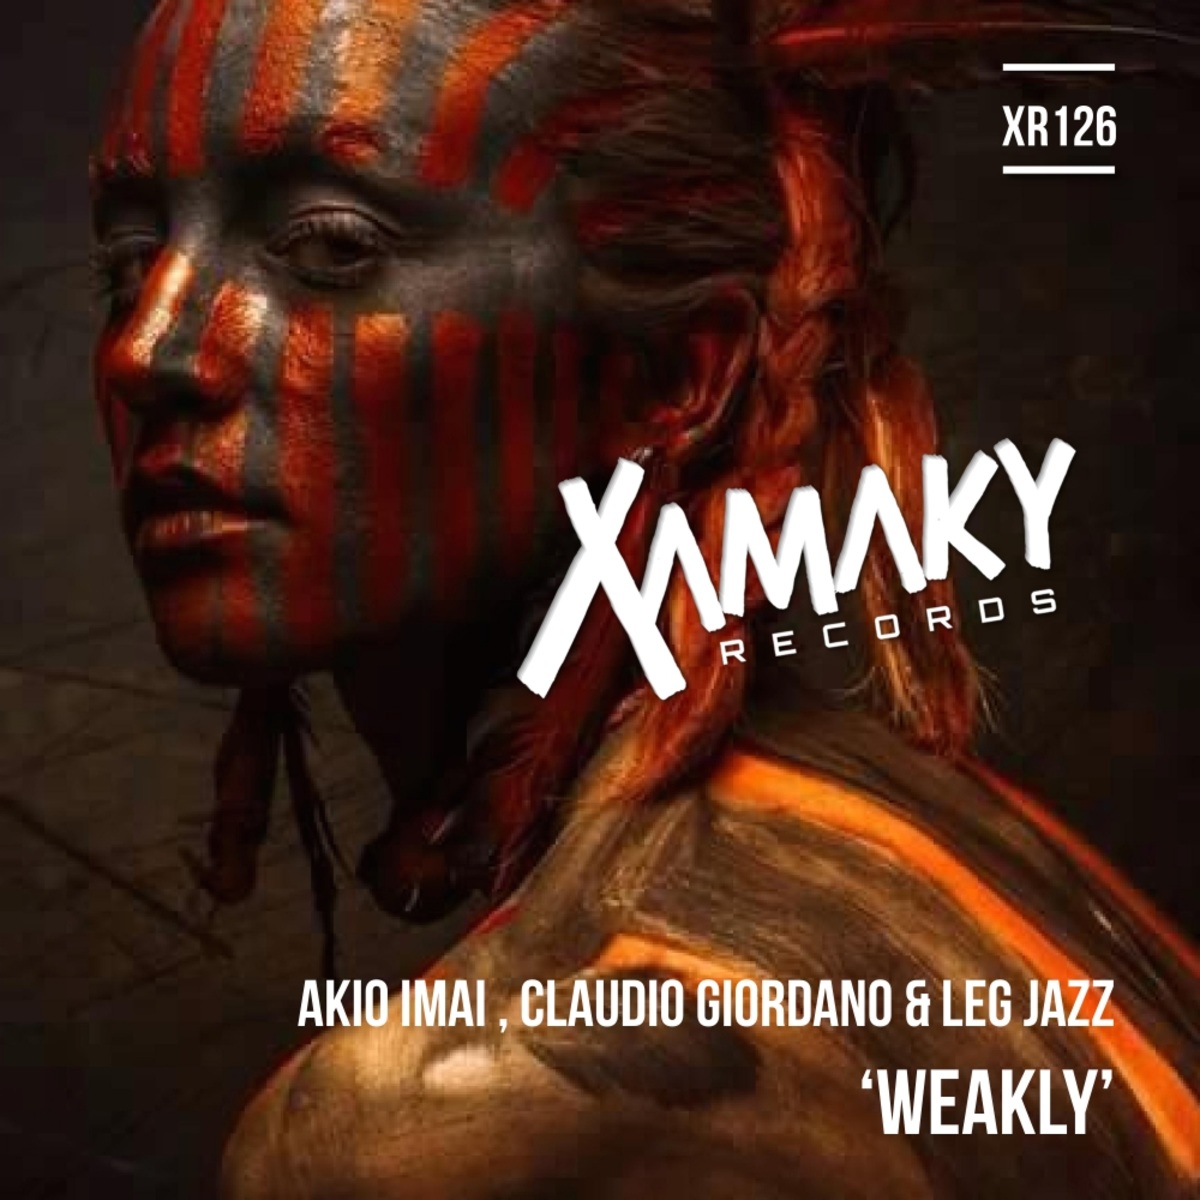 Claudio Giordano, Leg Jazz, Akio Imai - Weakly / Xamaky Records